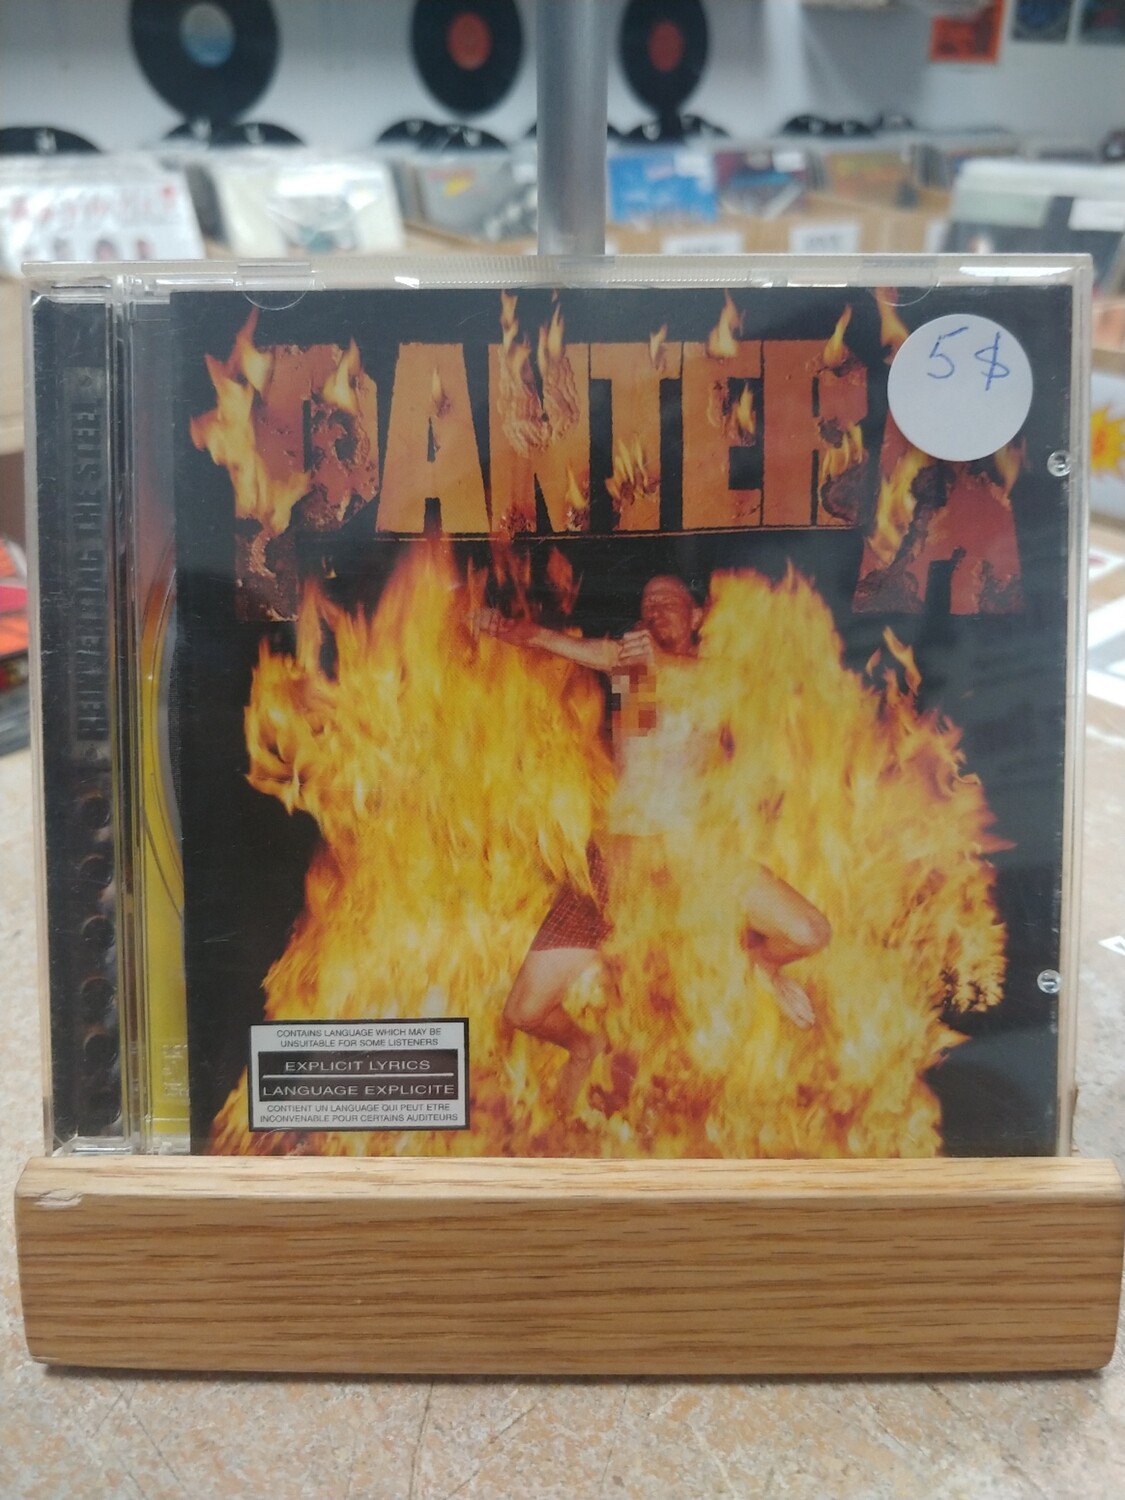 Pantera - Reinventing the steel (CD)